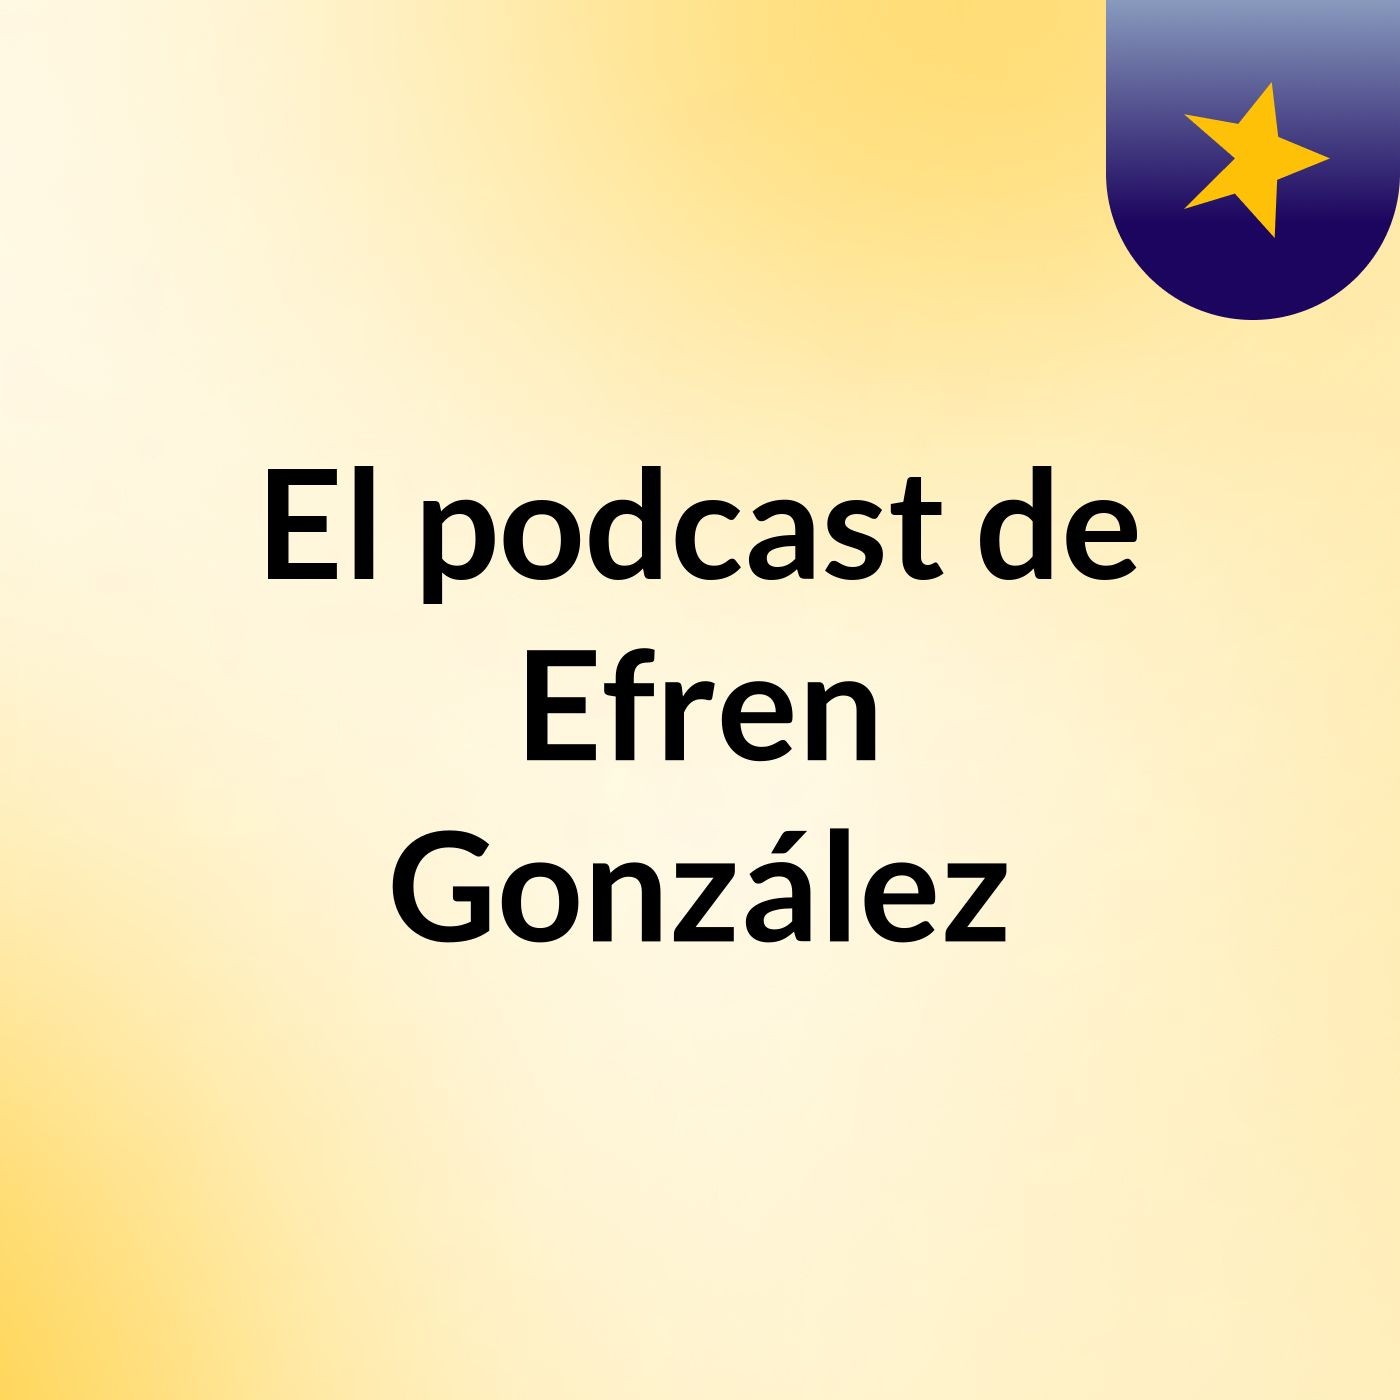 El podcast de Efren González